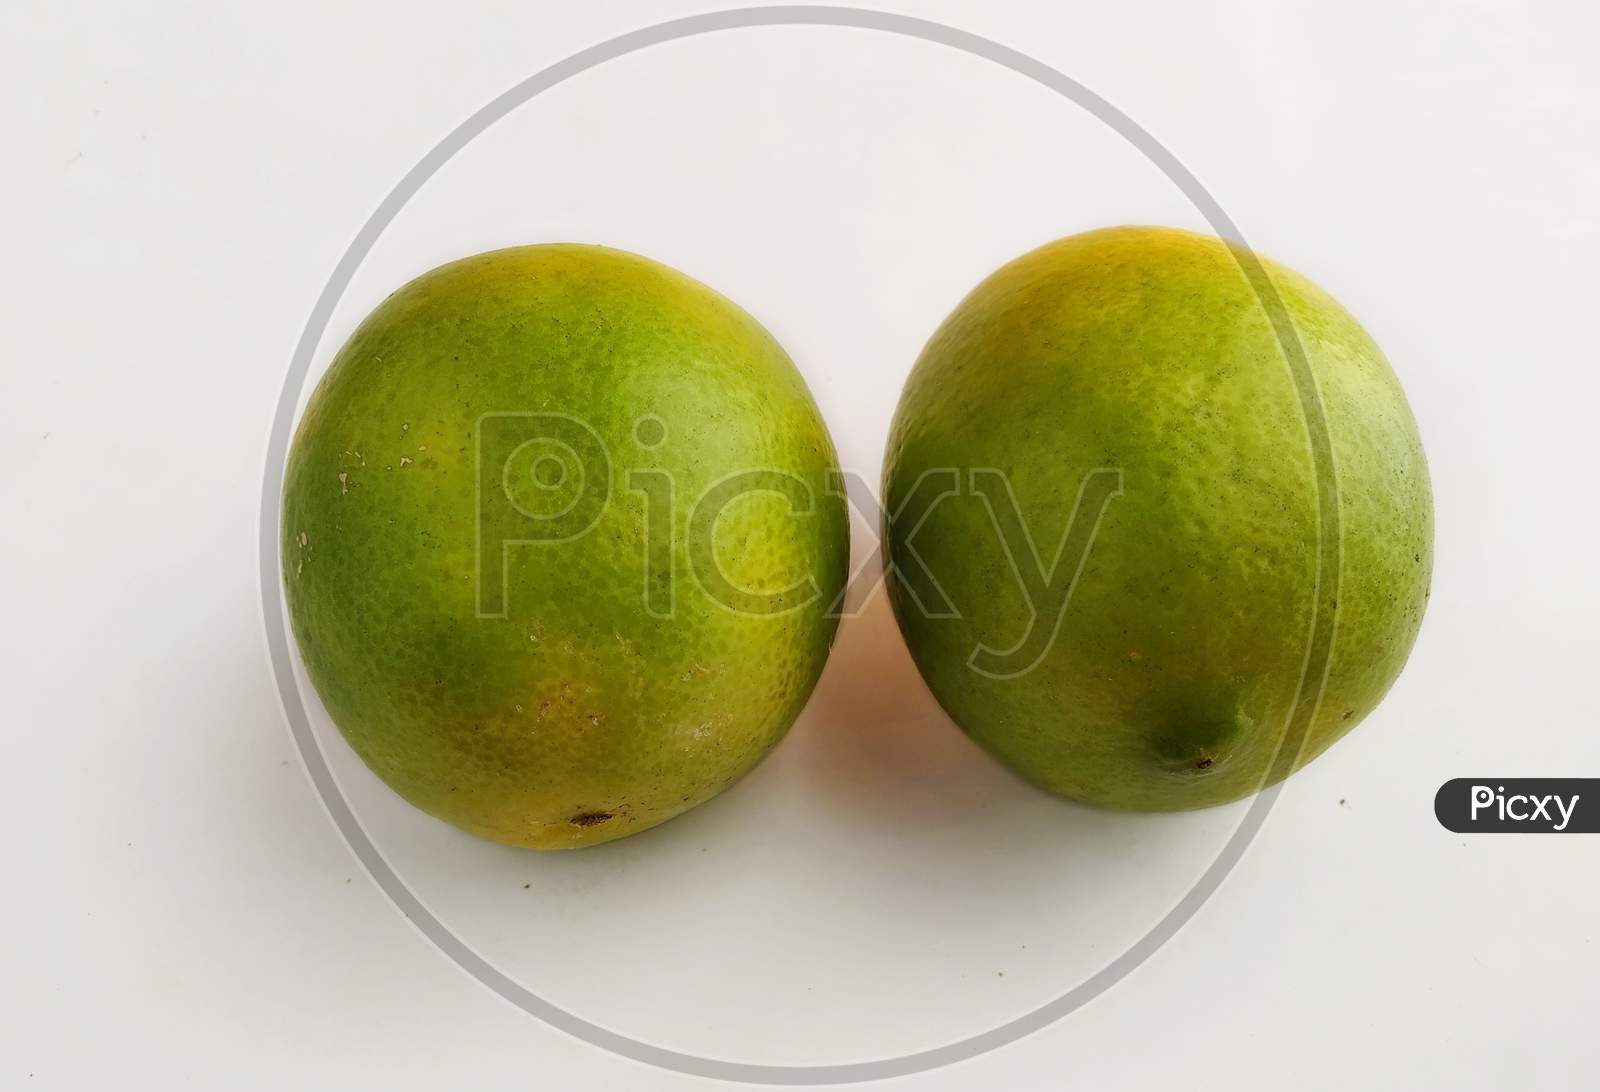 Photo Of Mosambi, Also Known As Sweet Lemon, Scientific Name : Citrus Limetta